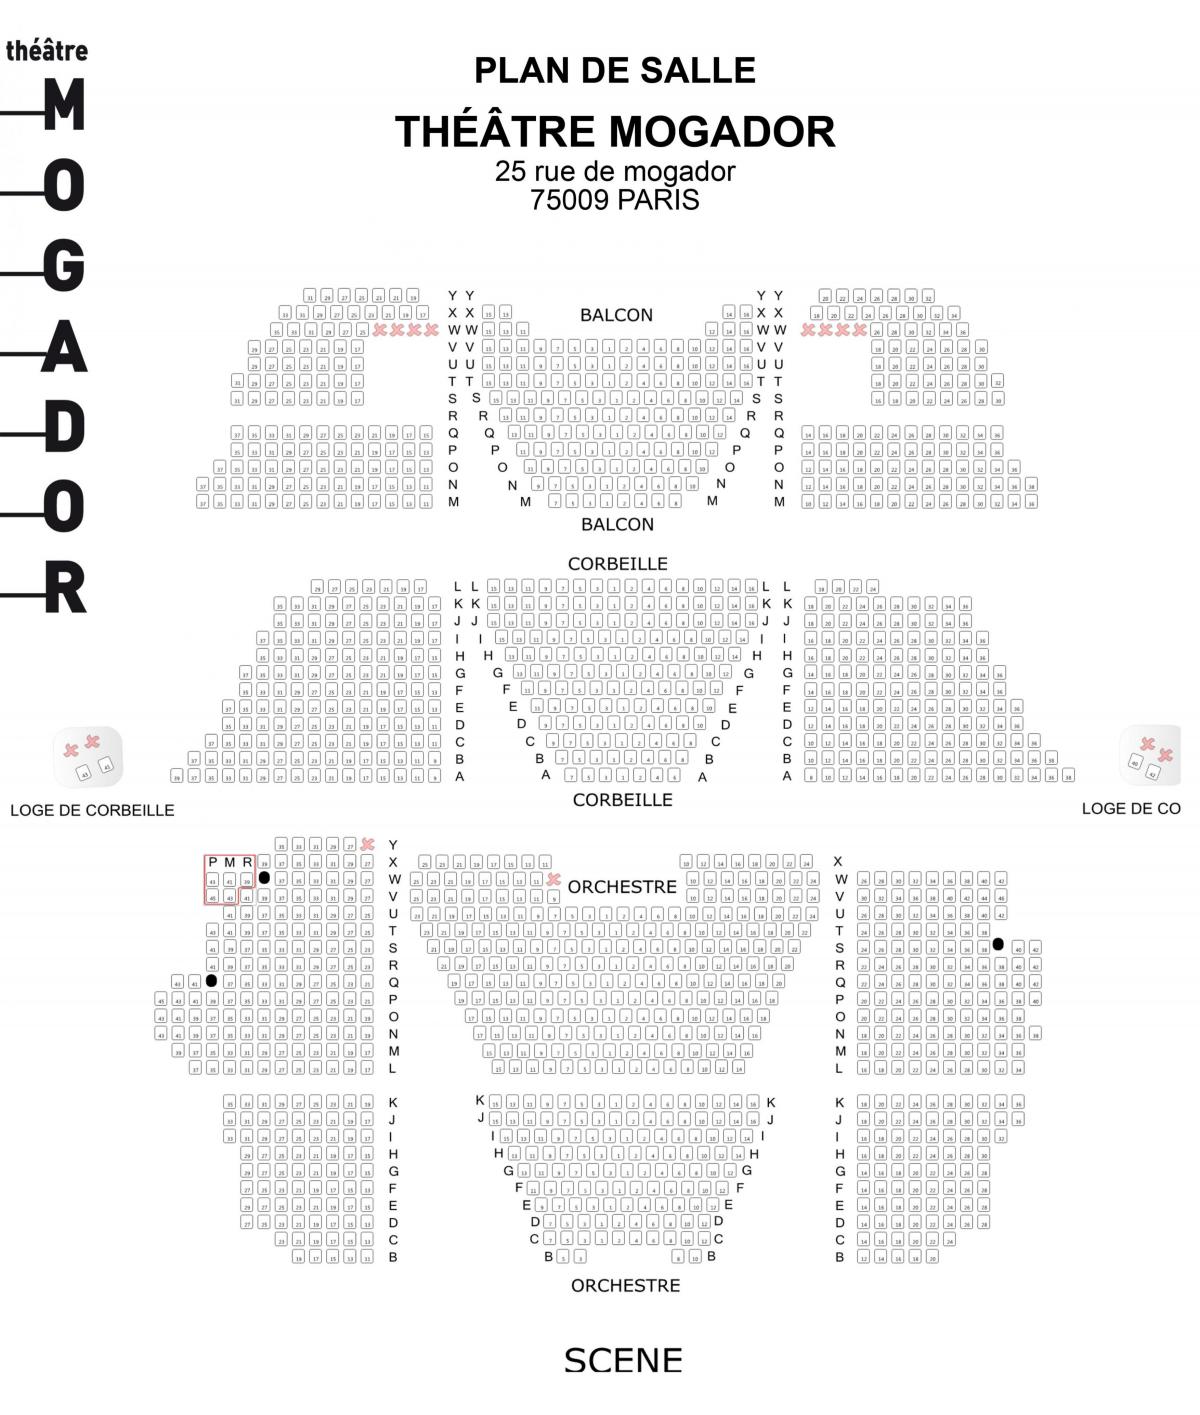 Map of The Théâtre Mogador